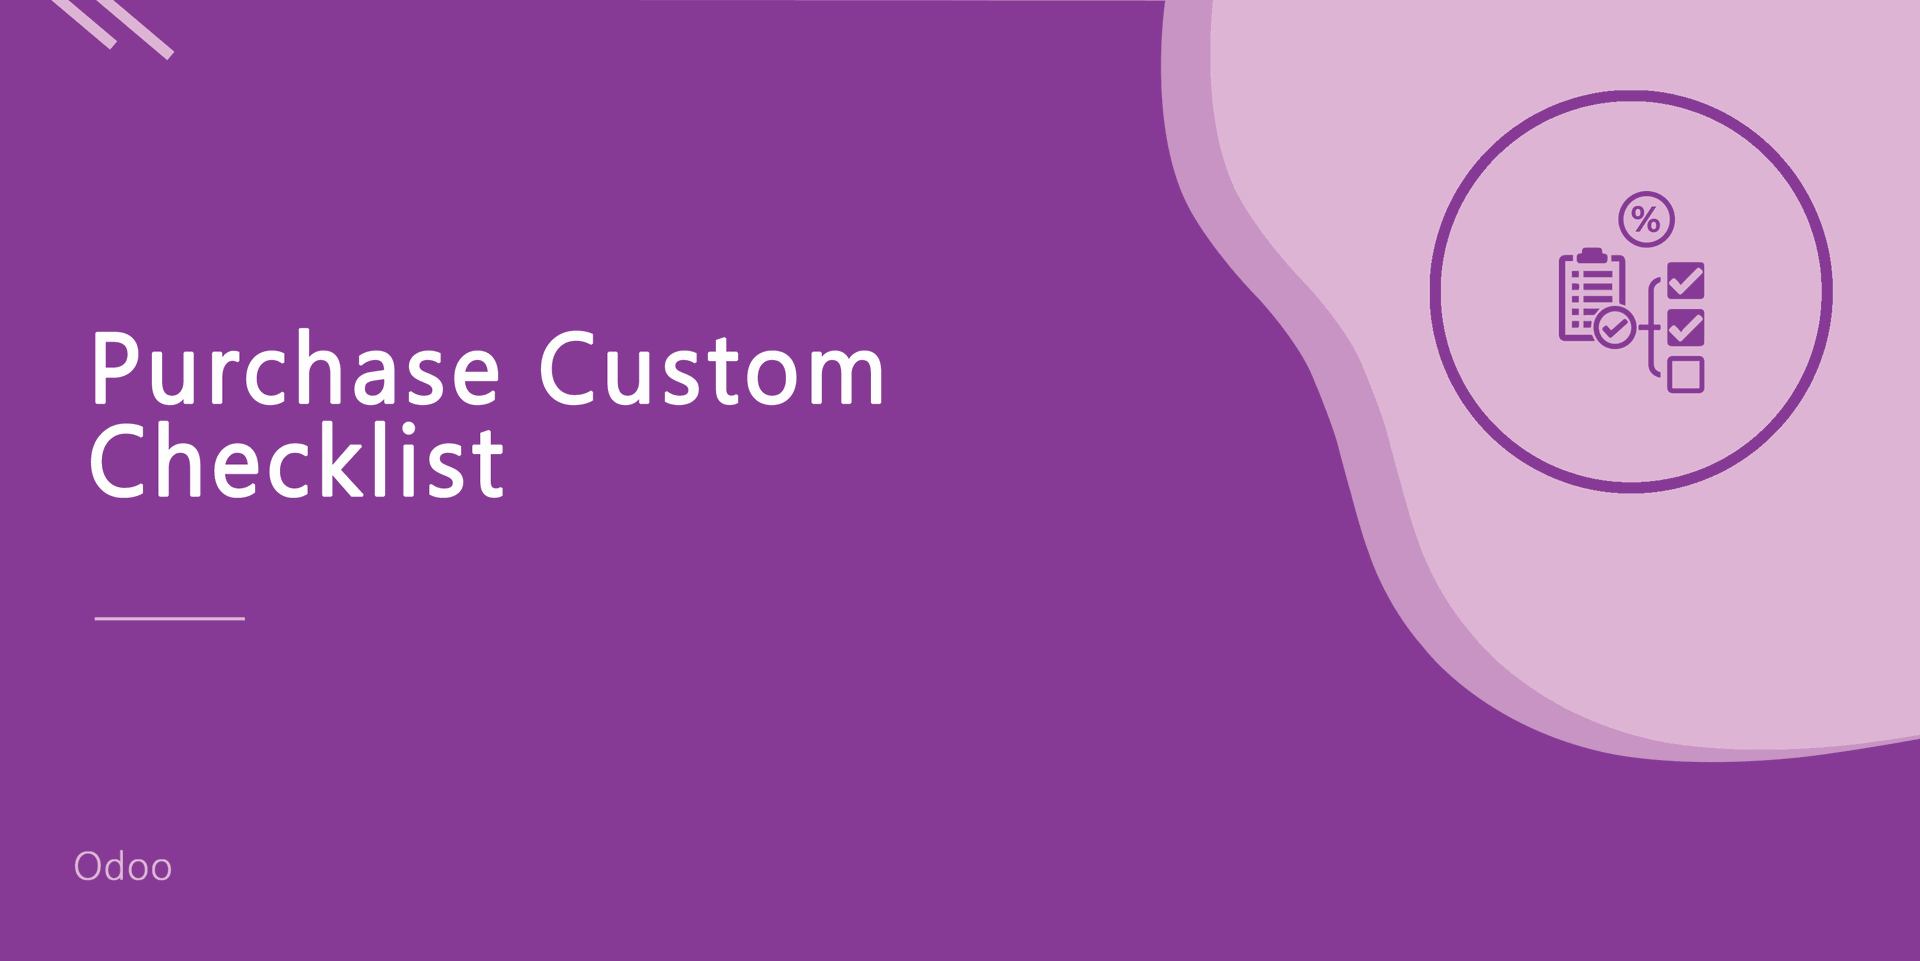 Purchase Order Custom Checklist
